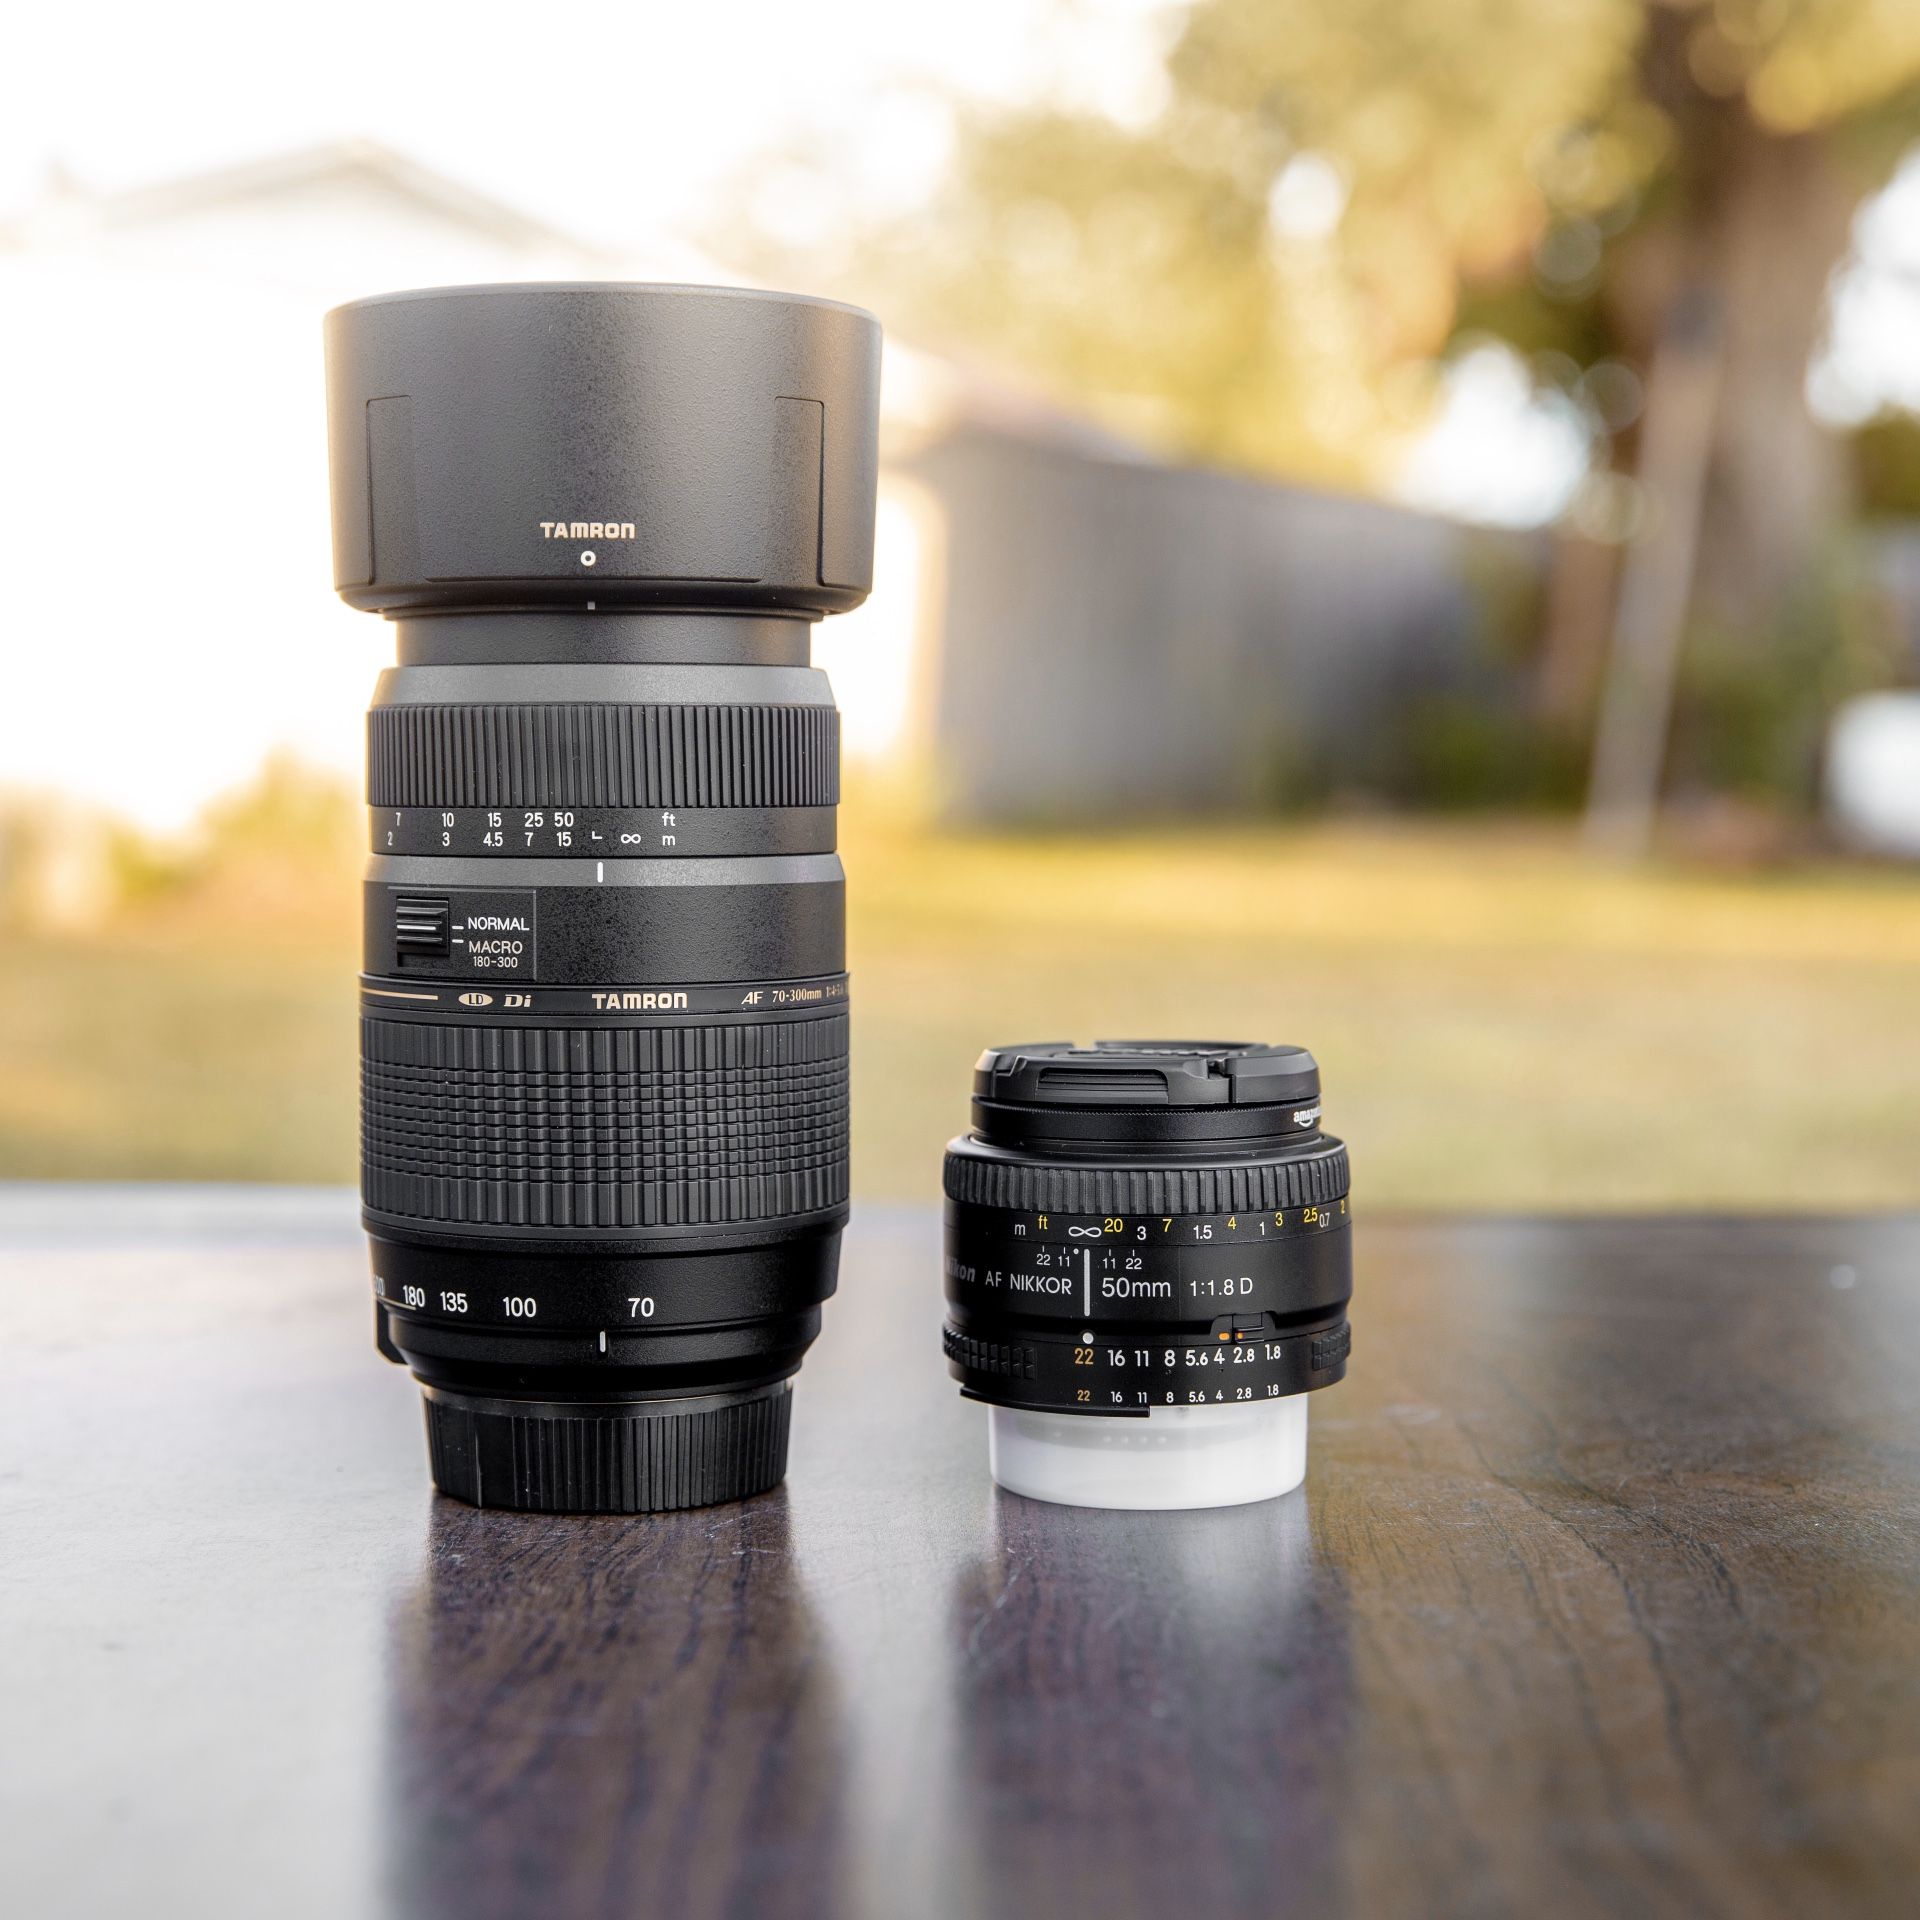 2 Nikon lenses: 50mm 1.8D and 70-300mm